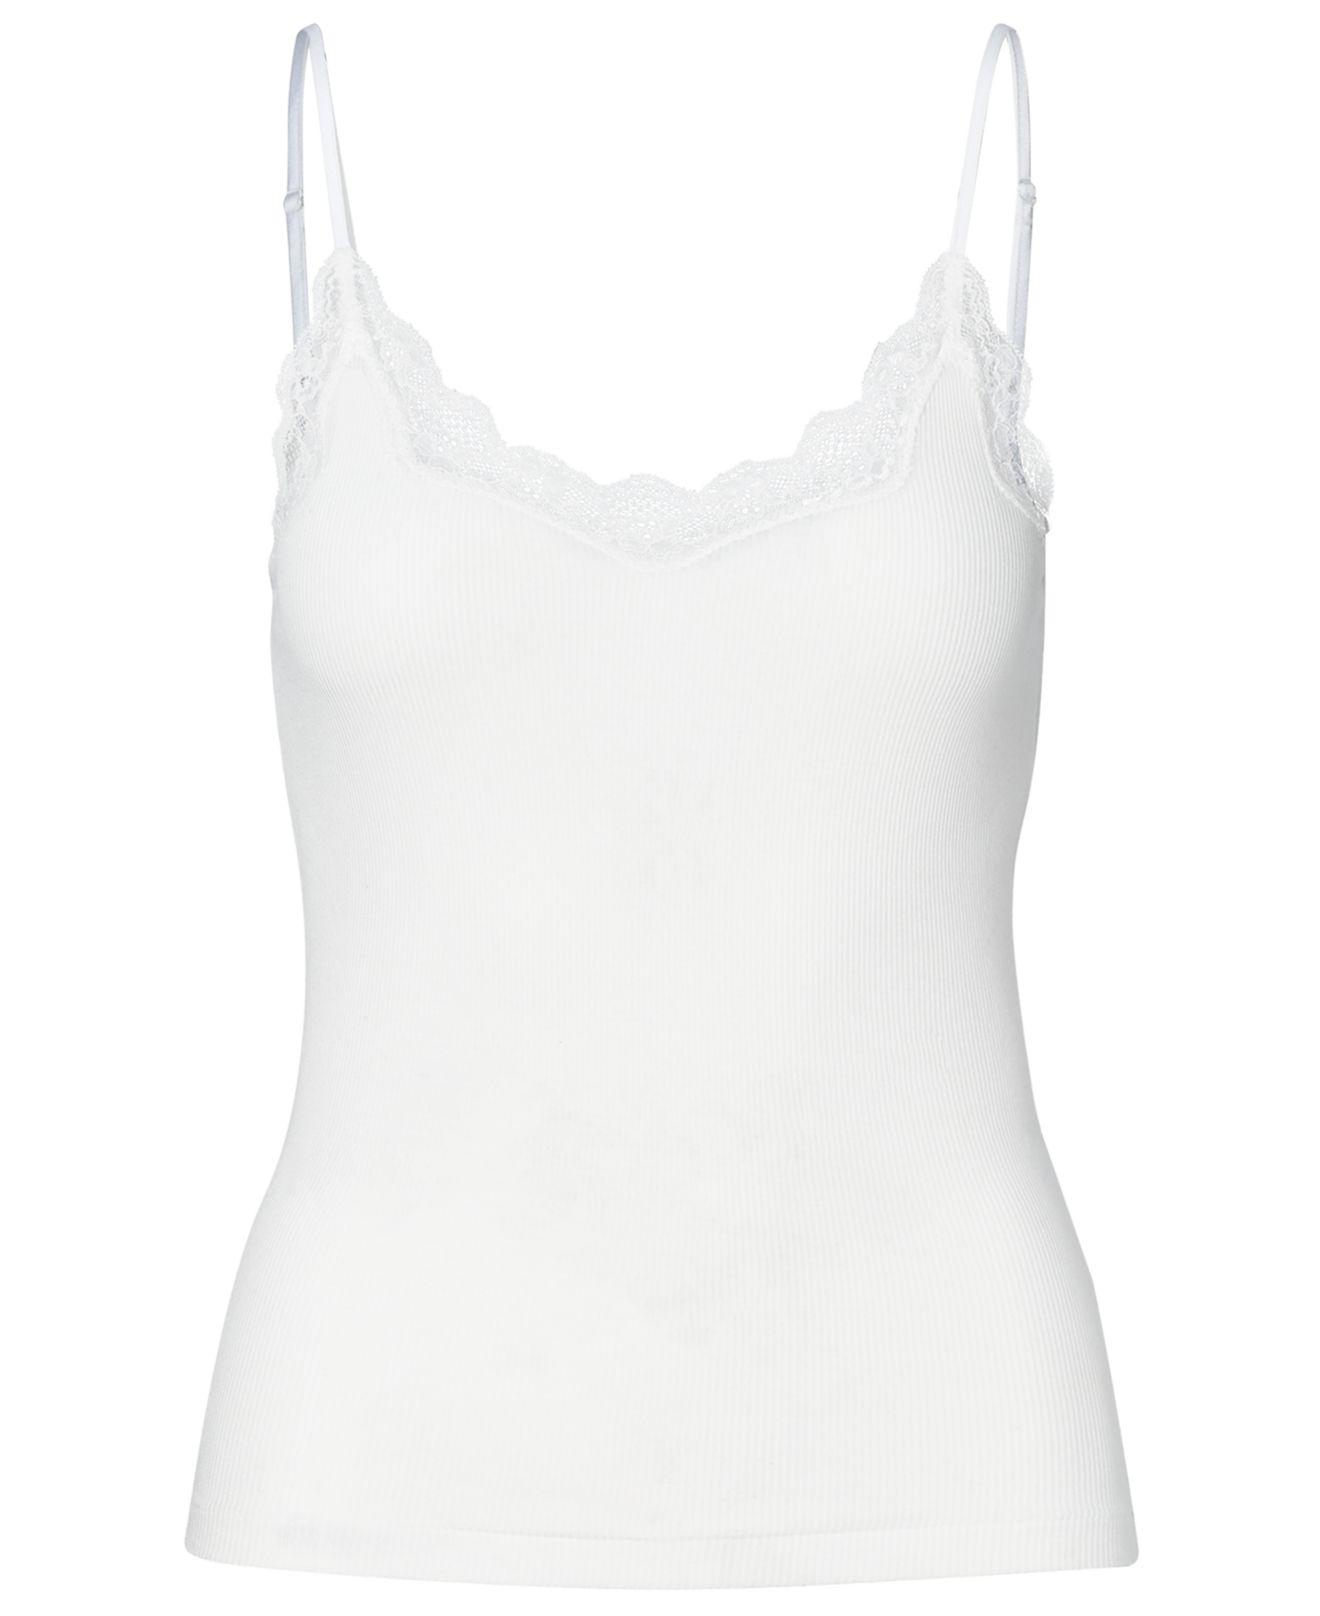 Polo Ralph Lauren Lace-trim Cotton Camisole in White - Lyst